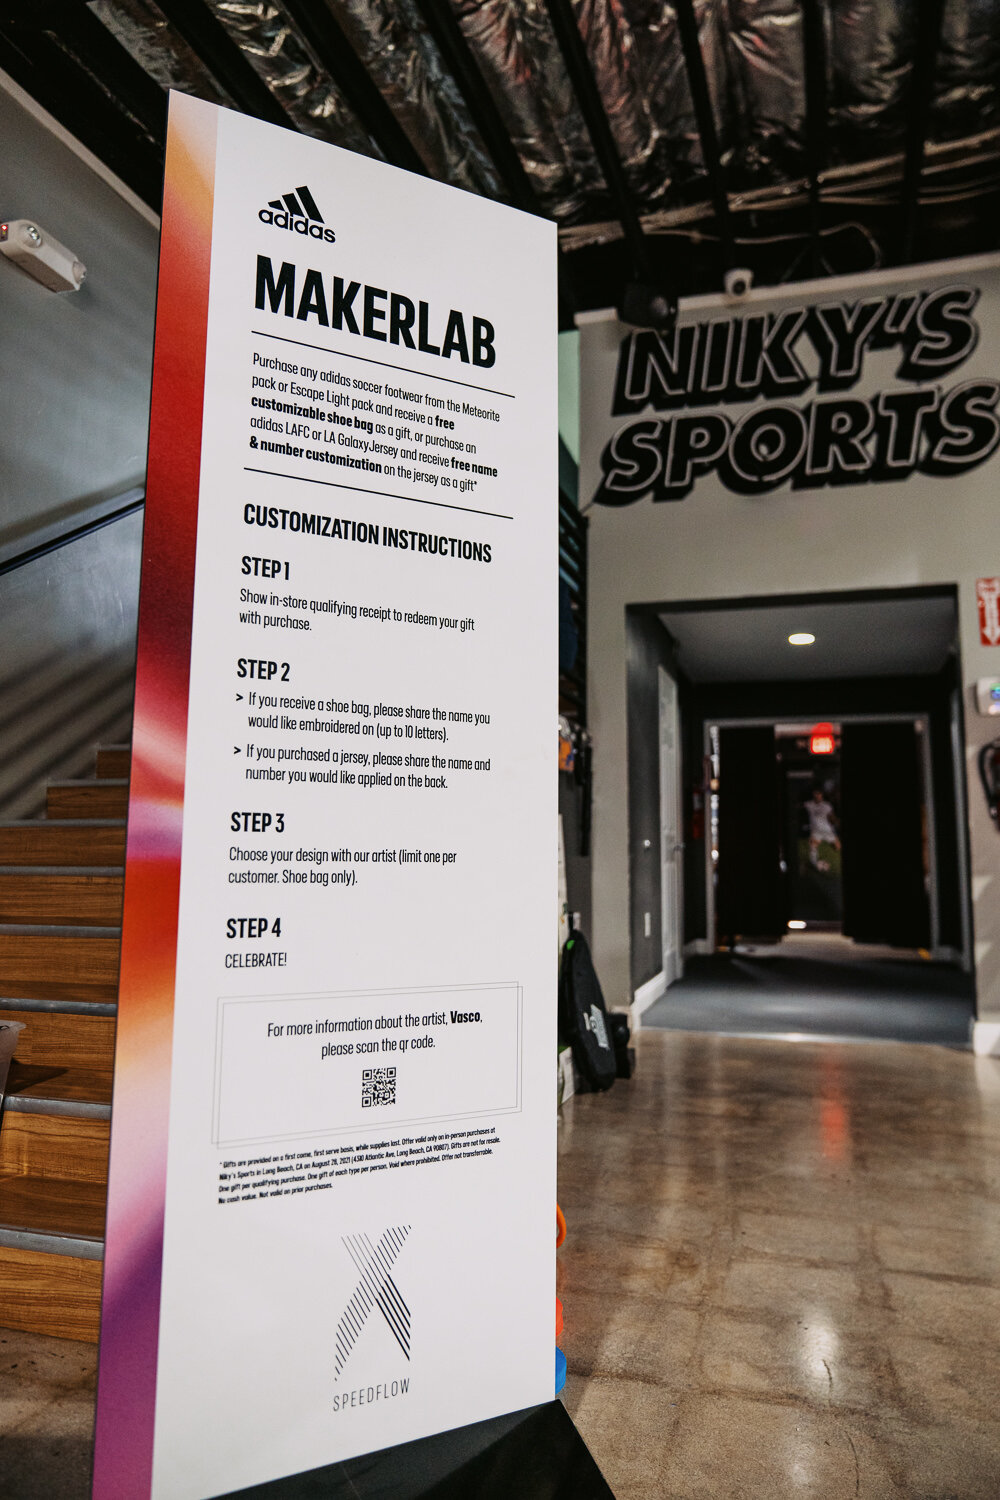 Adidas MakerLab Event  Blog of Los Angeles + Houston Based Music